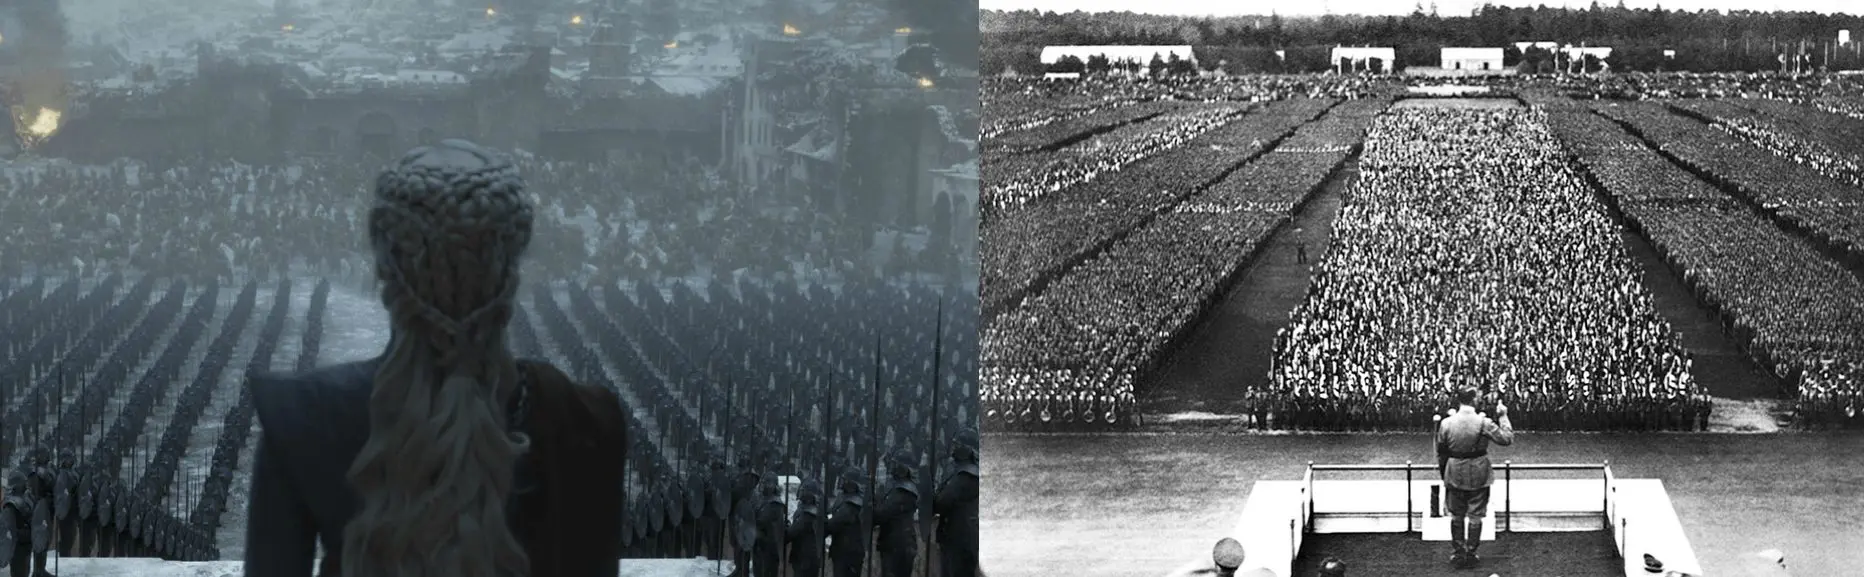 Dany Hitler comparison